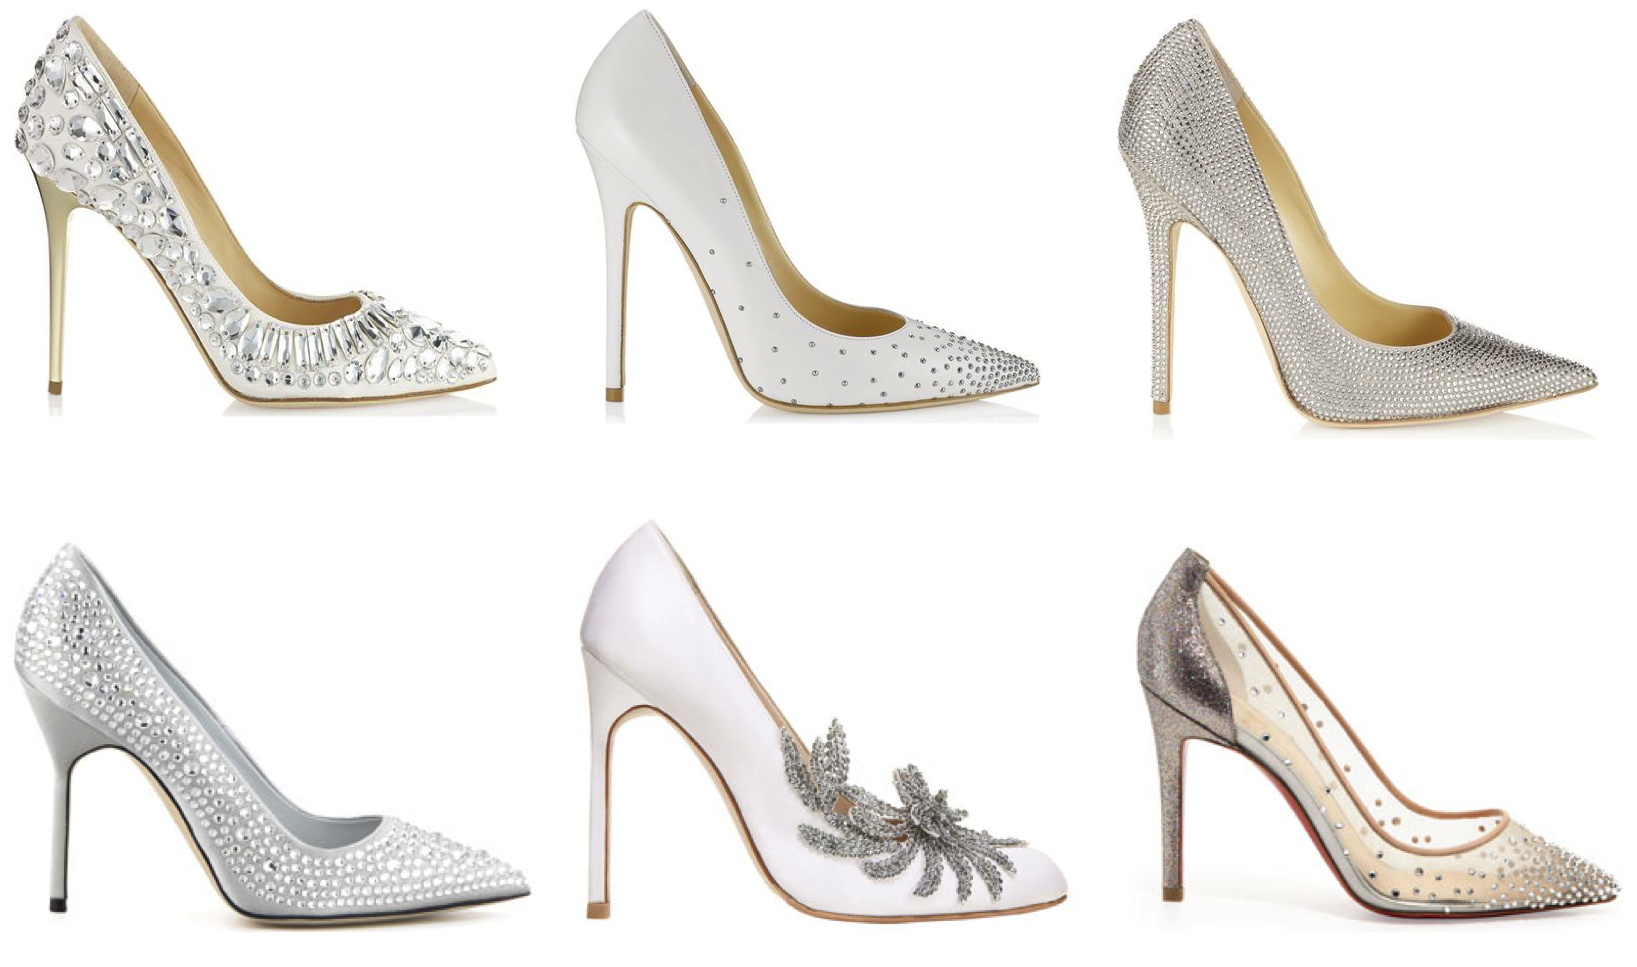 Classic Pumps: Wedding Shoe Picks | According to Yanni D